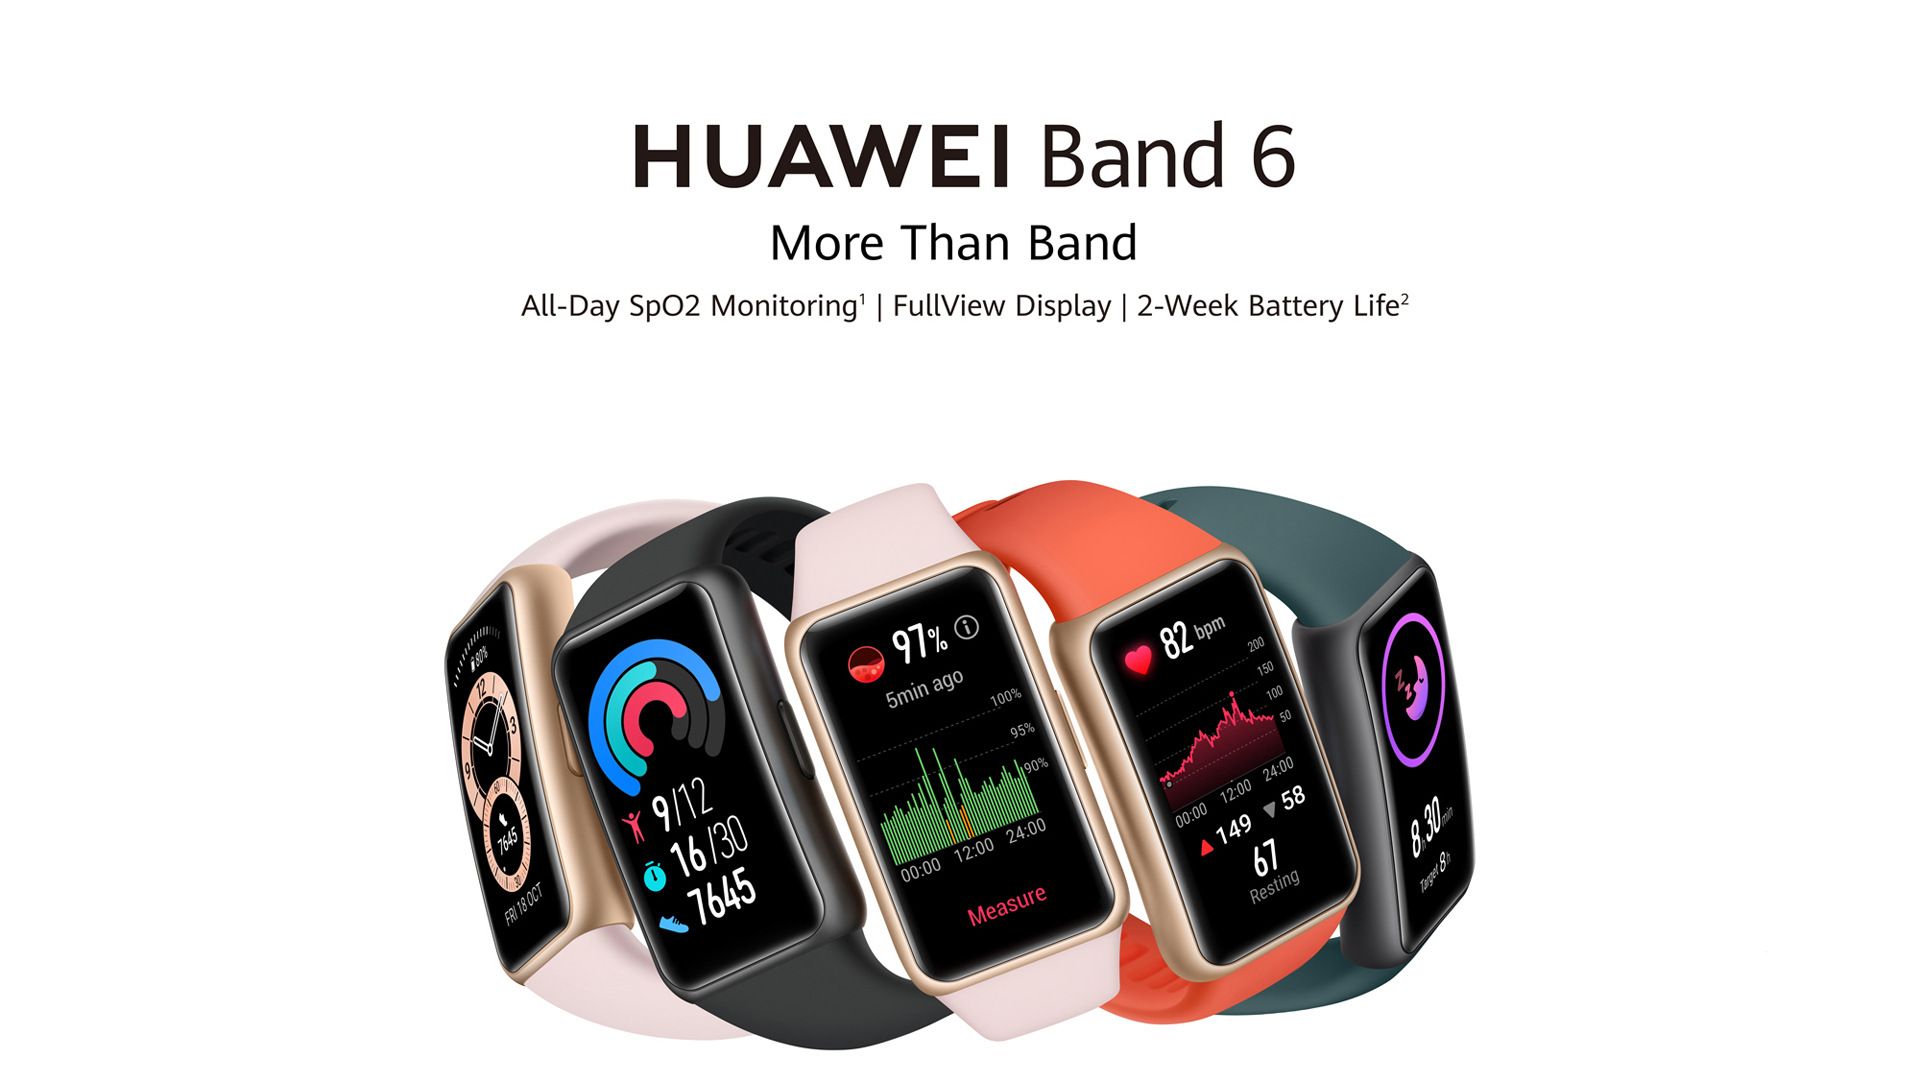 In price ksa 6 band huawei Huawei Band